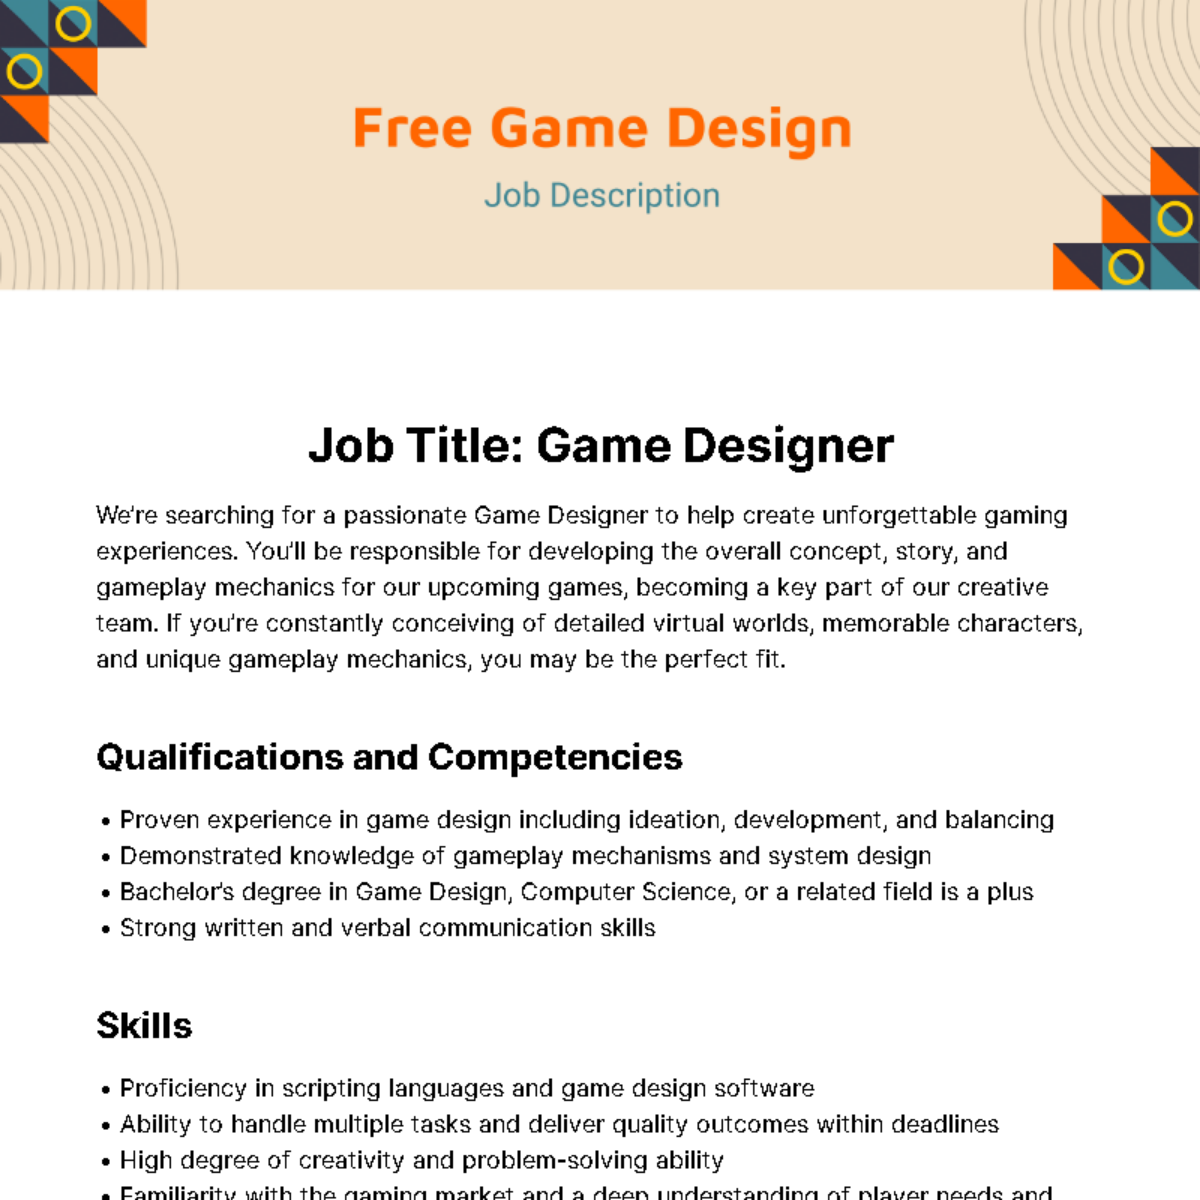 Game Design Job Description Template